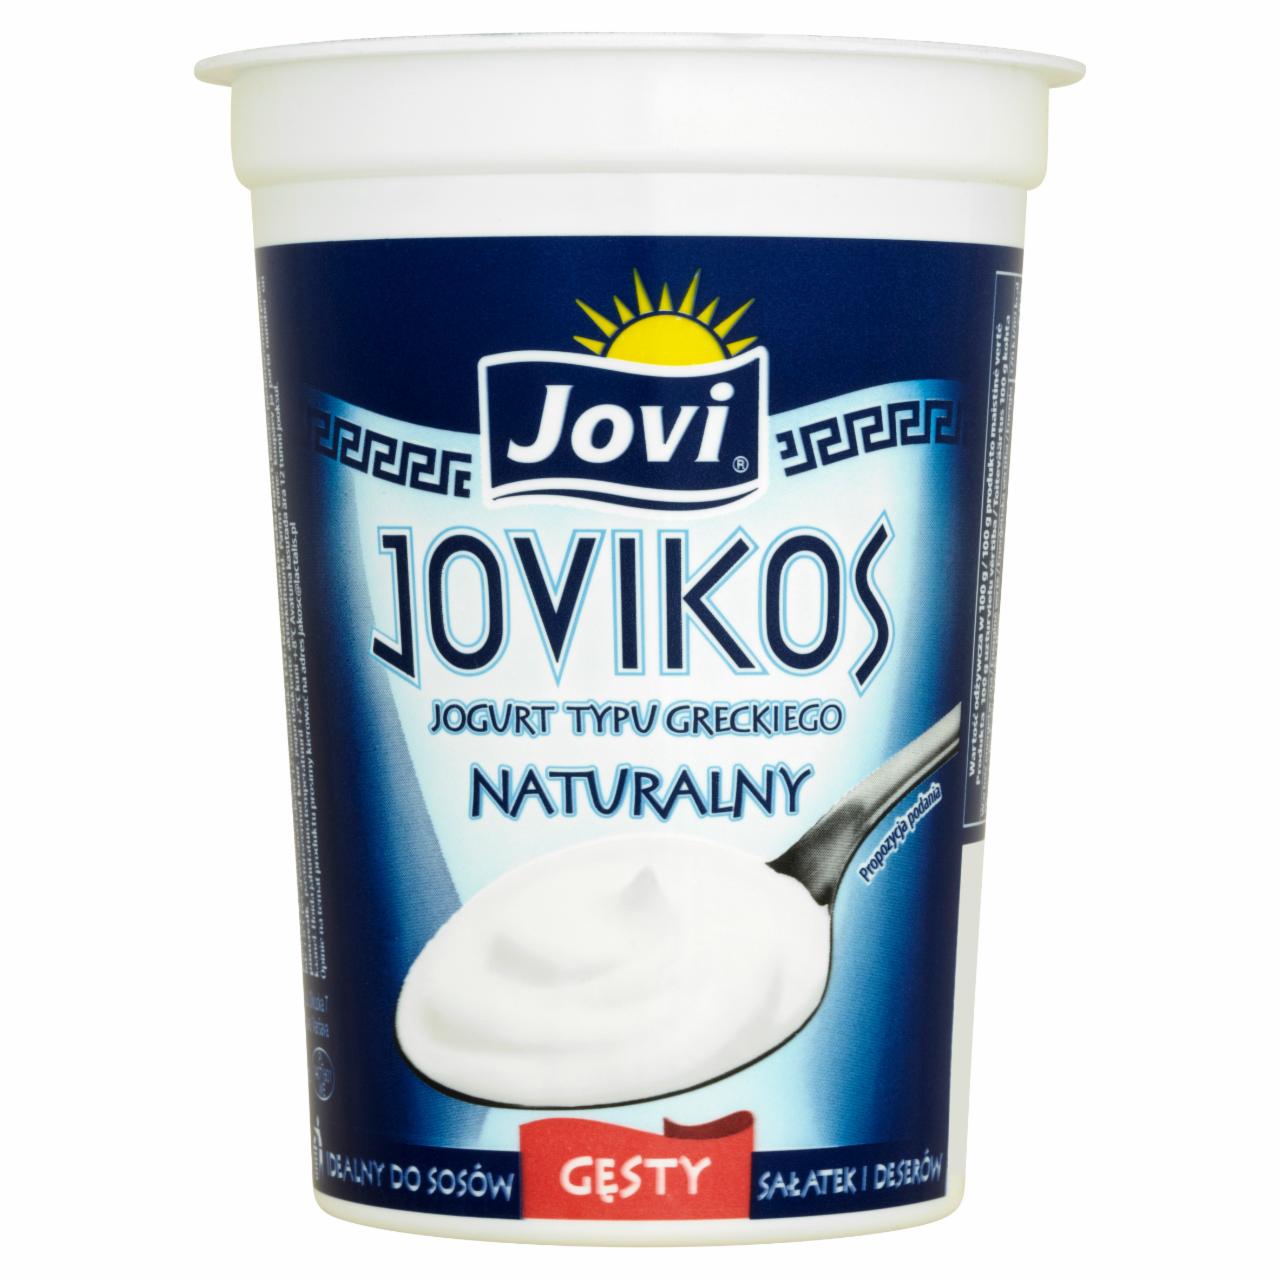 Zdjęcia - Jovi Jovikos Jogurt typu greckiego naturalny 500 g